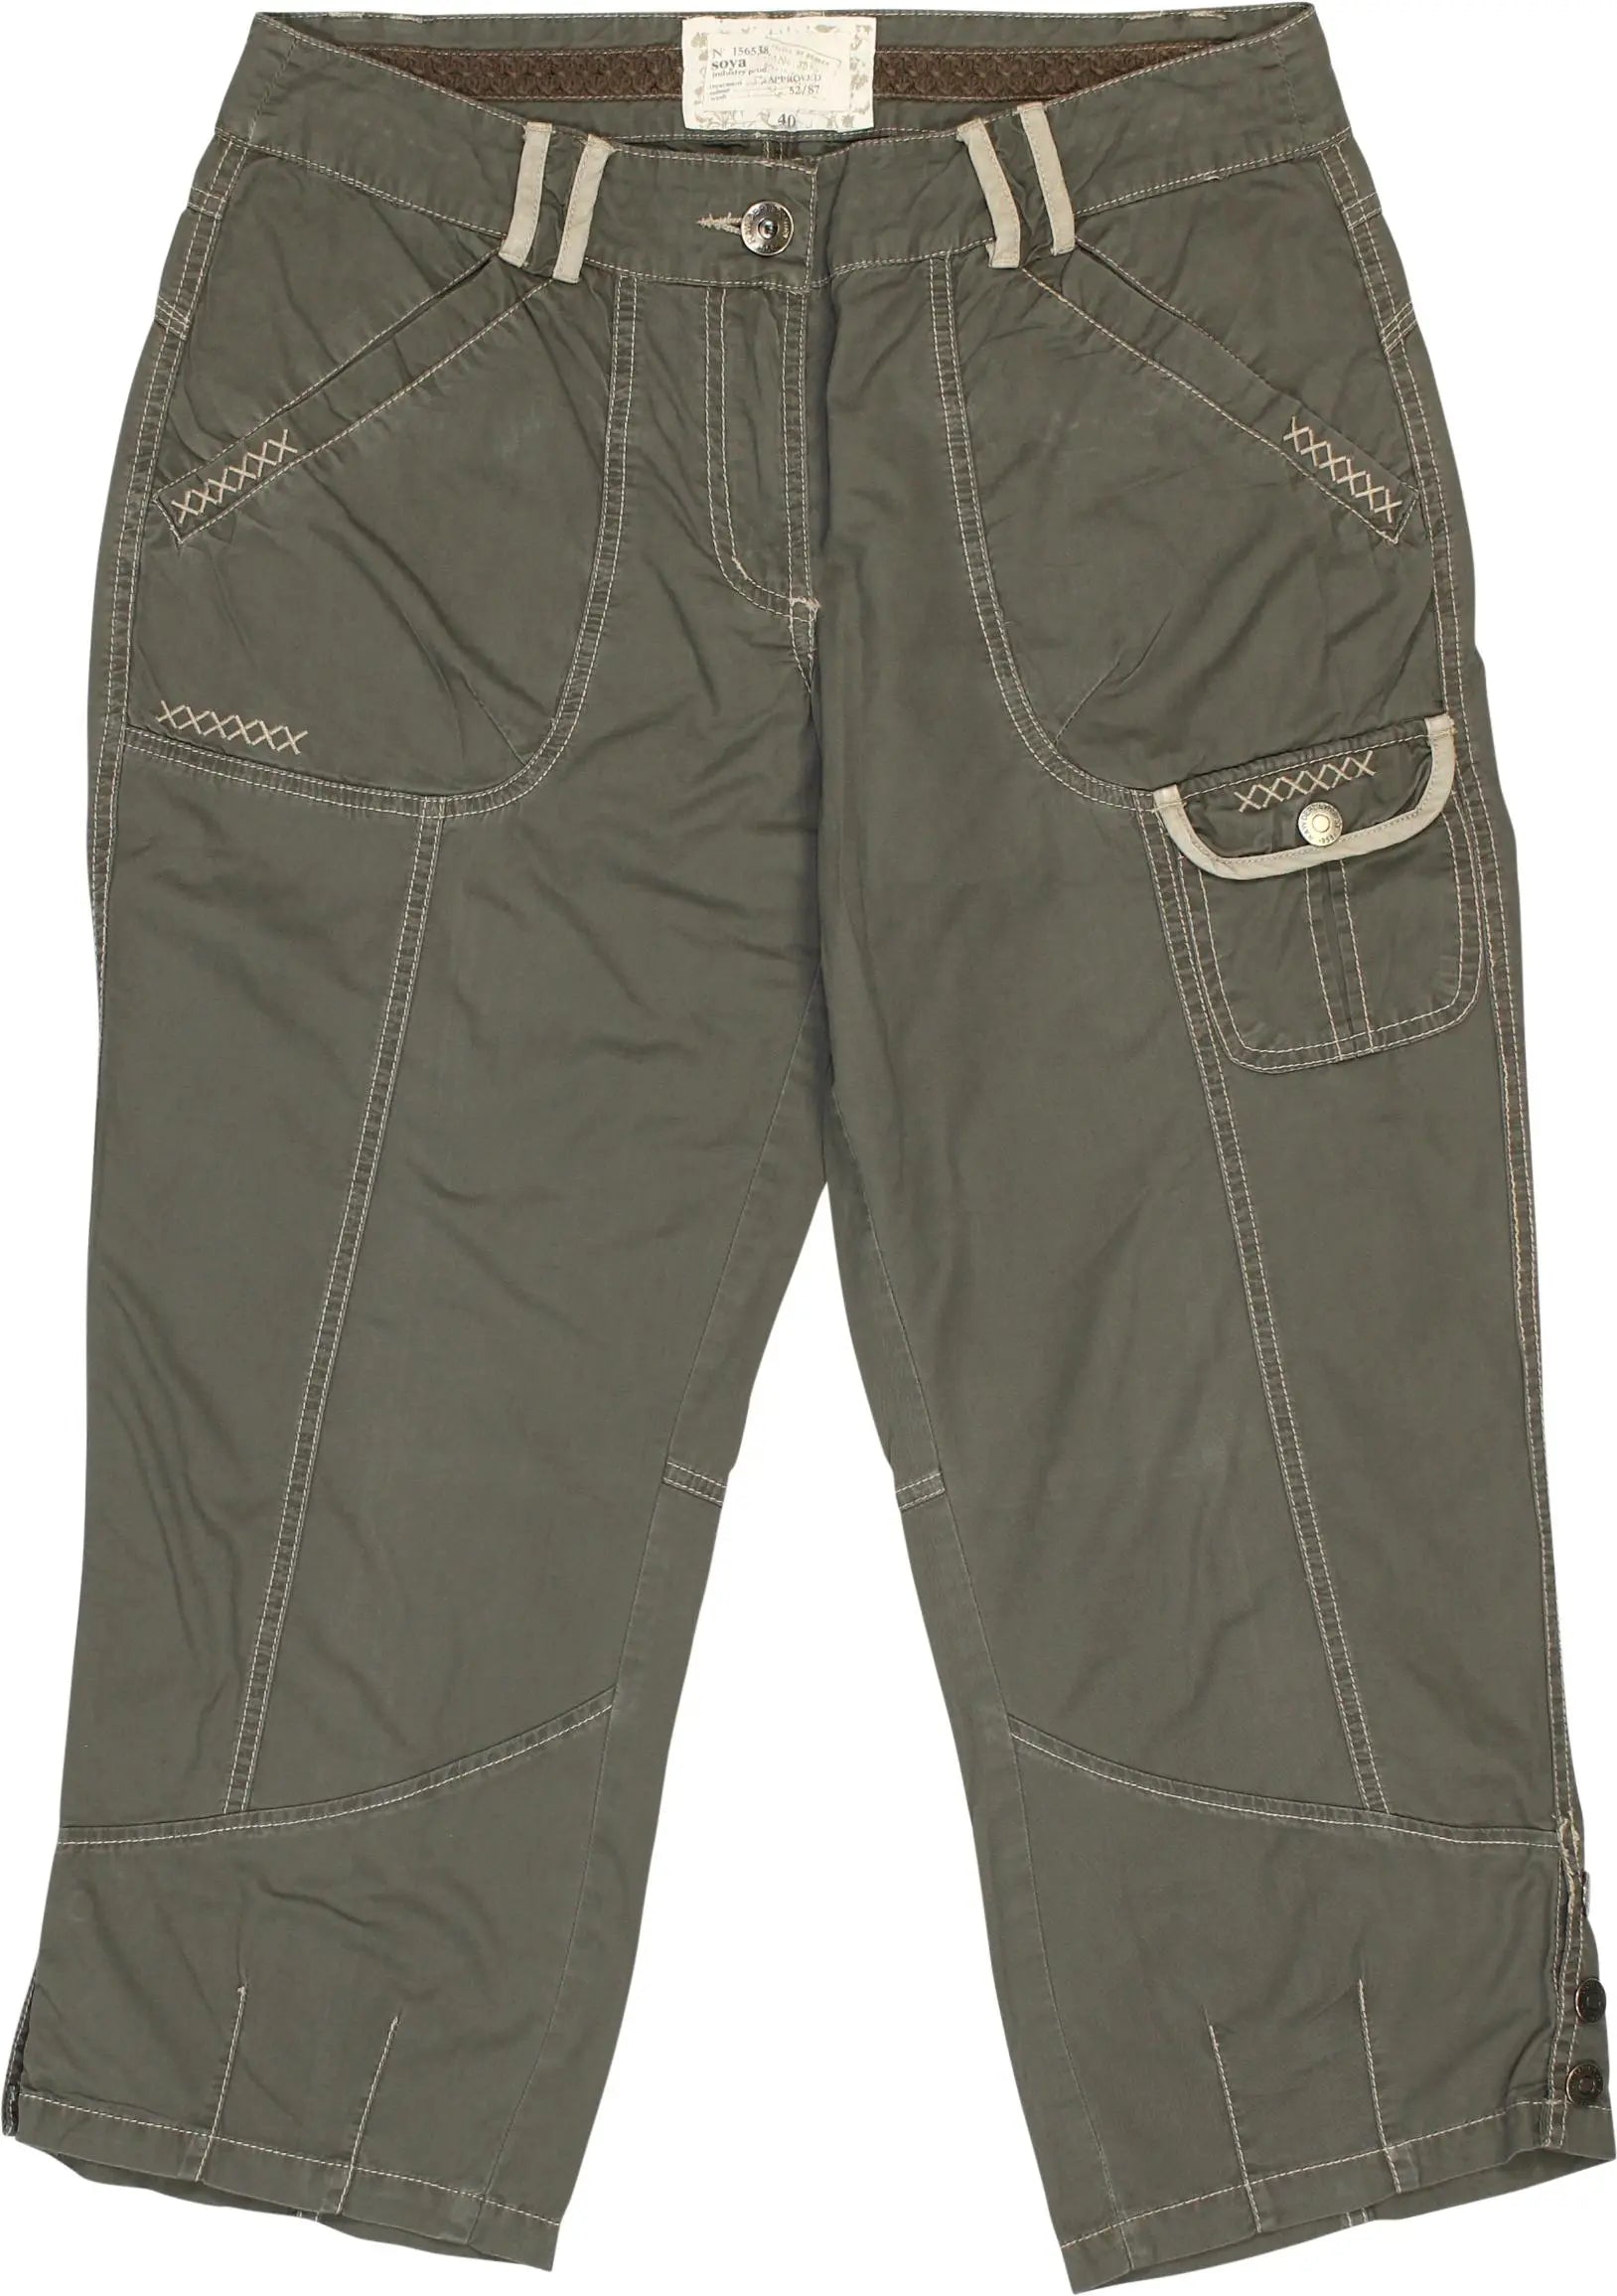 Dash Brown Cargo Capri Pants  Size 8 Petite – Jubilee Thrift